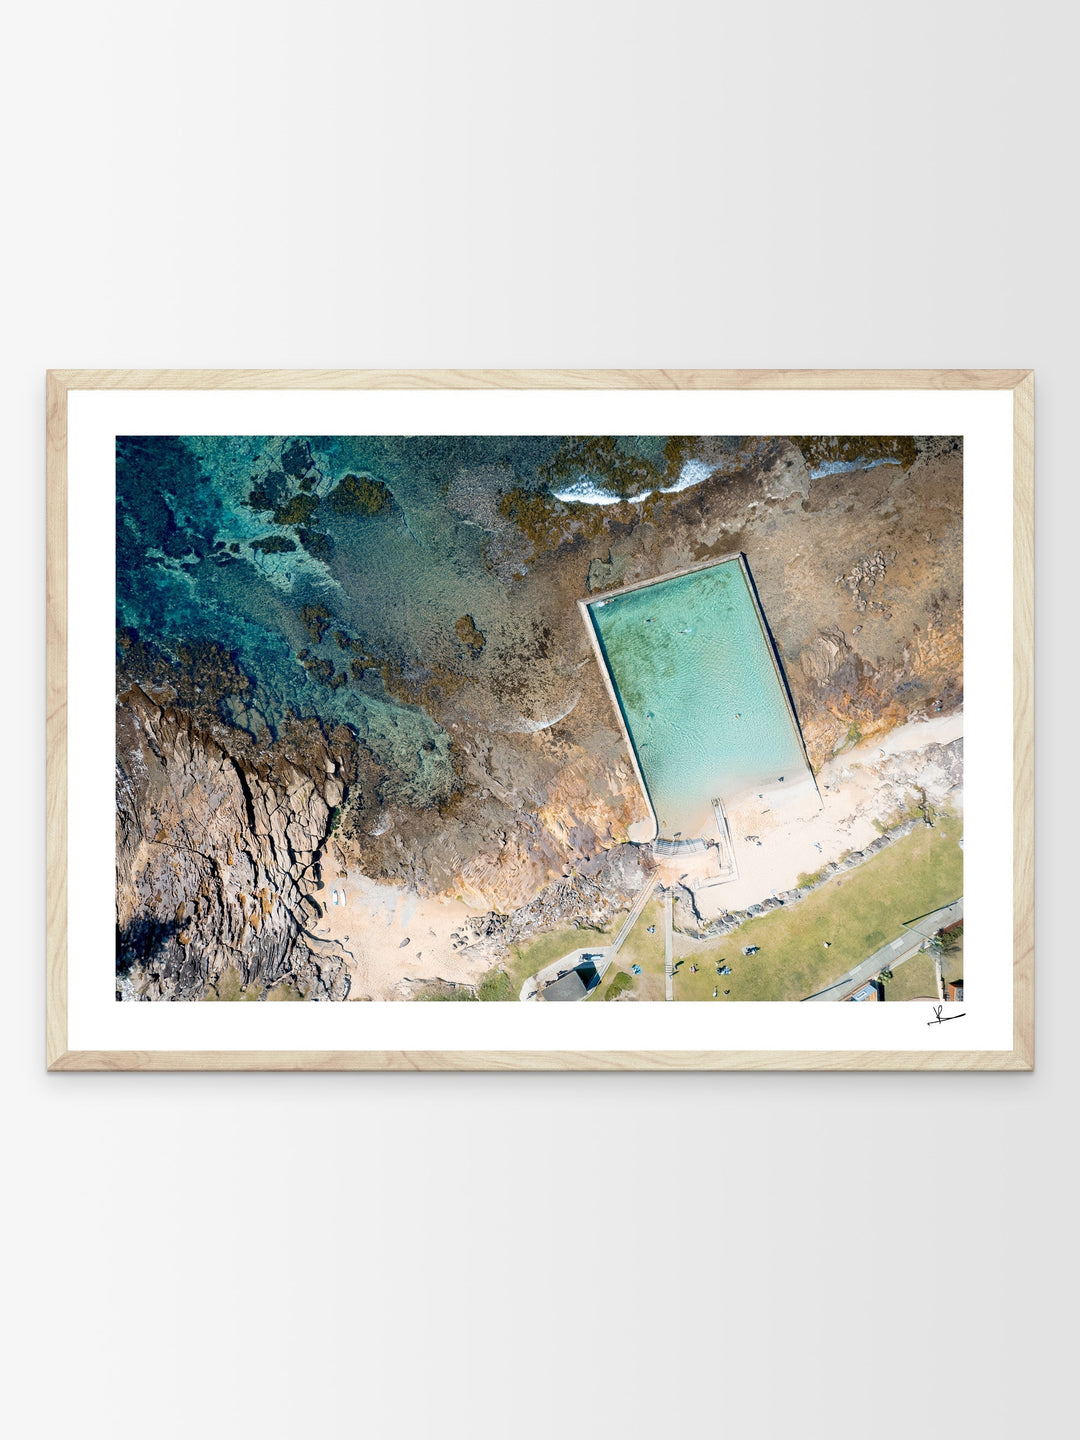 Cronulla - Shelly Beach Pool 01 - Wall Art Print - Australia Unseen